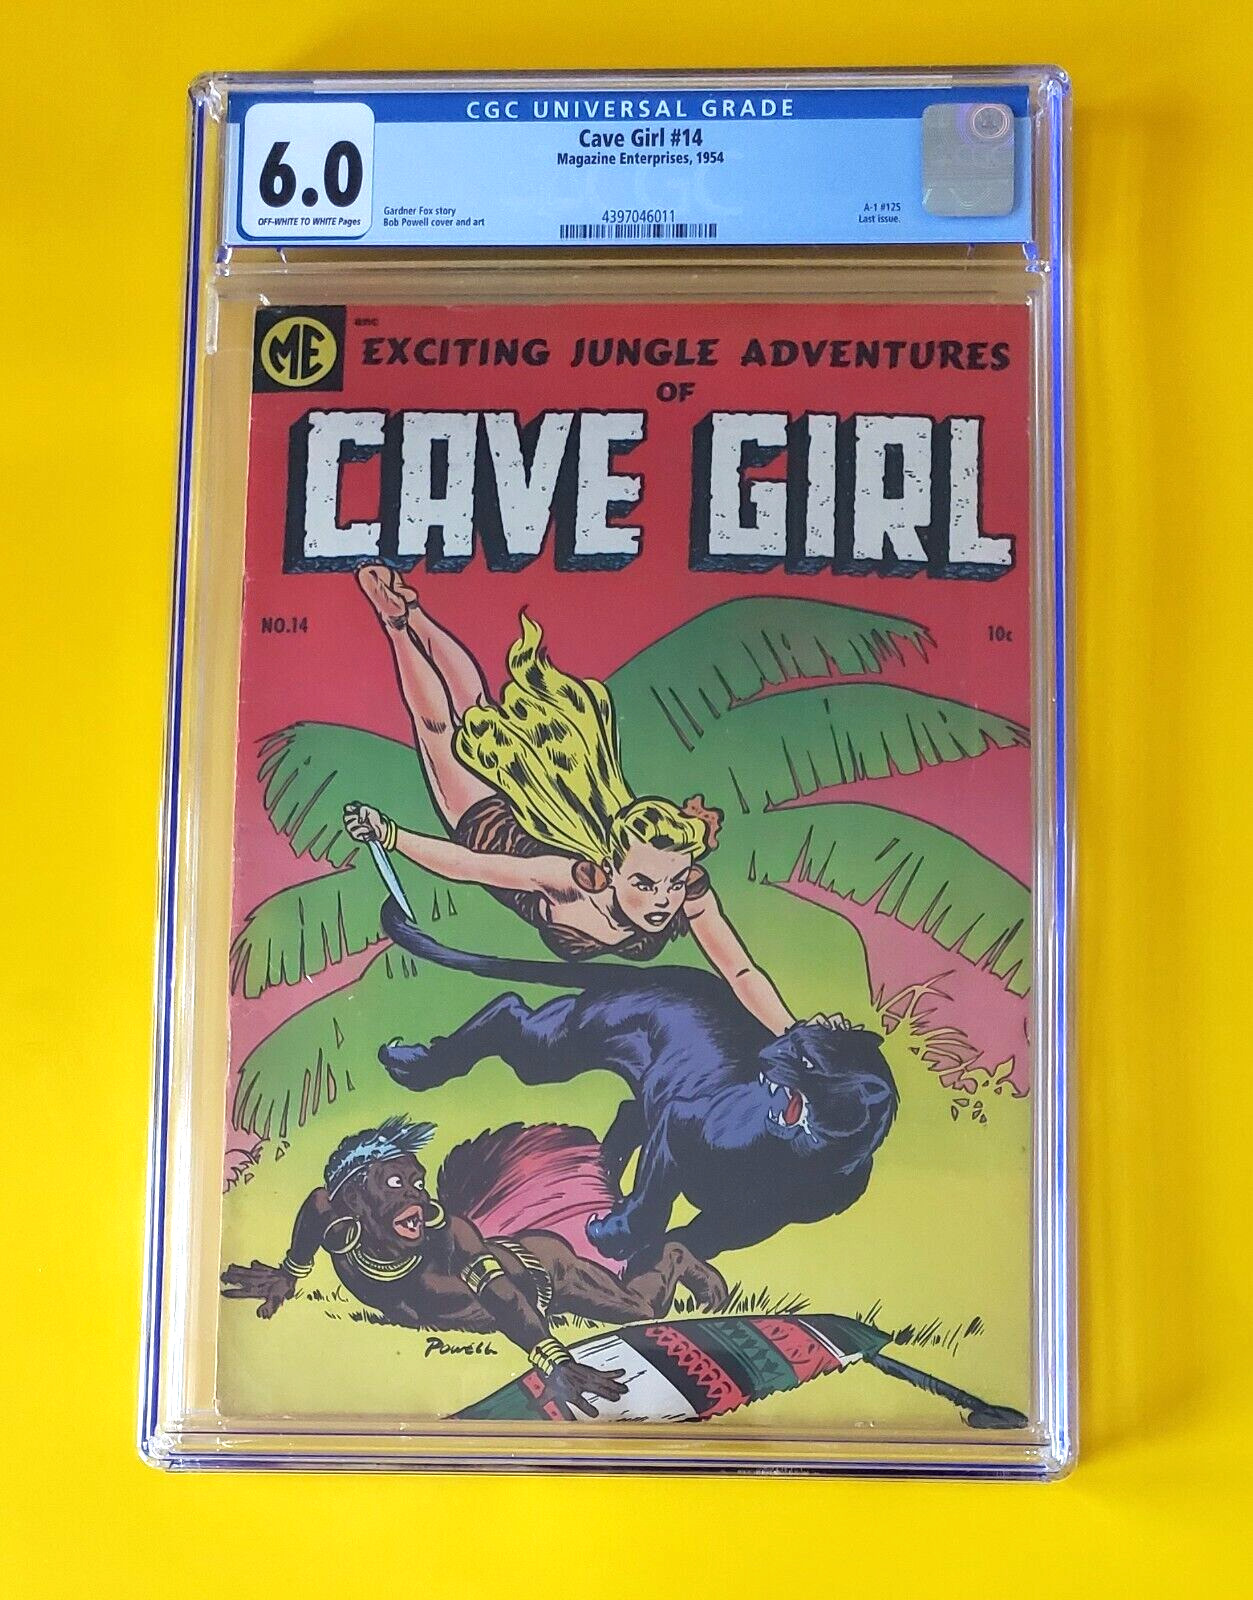 Cave Girl #14 Magazine Enterprises 1954 Bob Powell RARE Last Issue - CGC 6.0